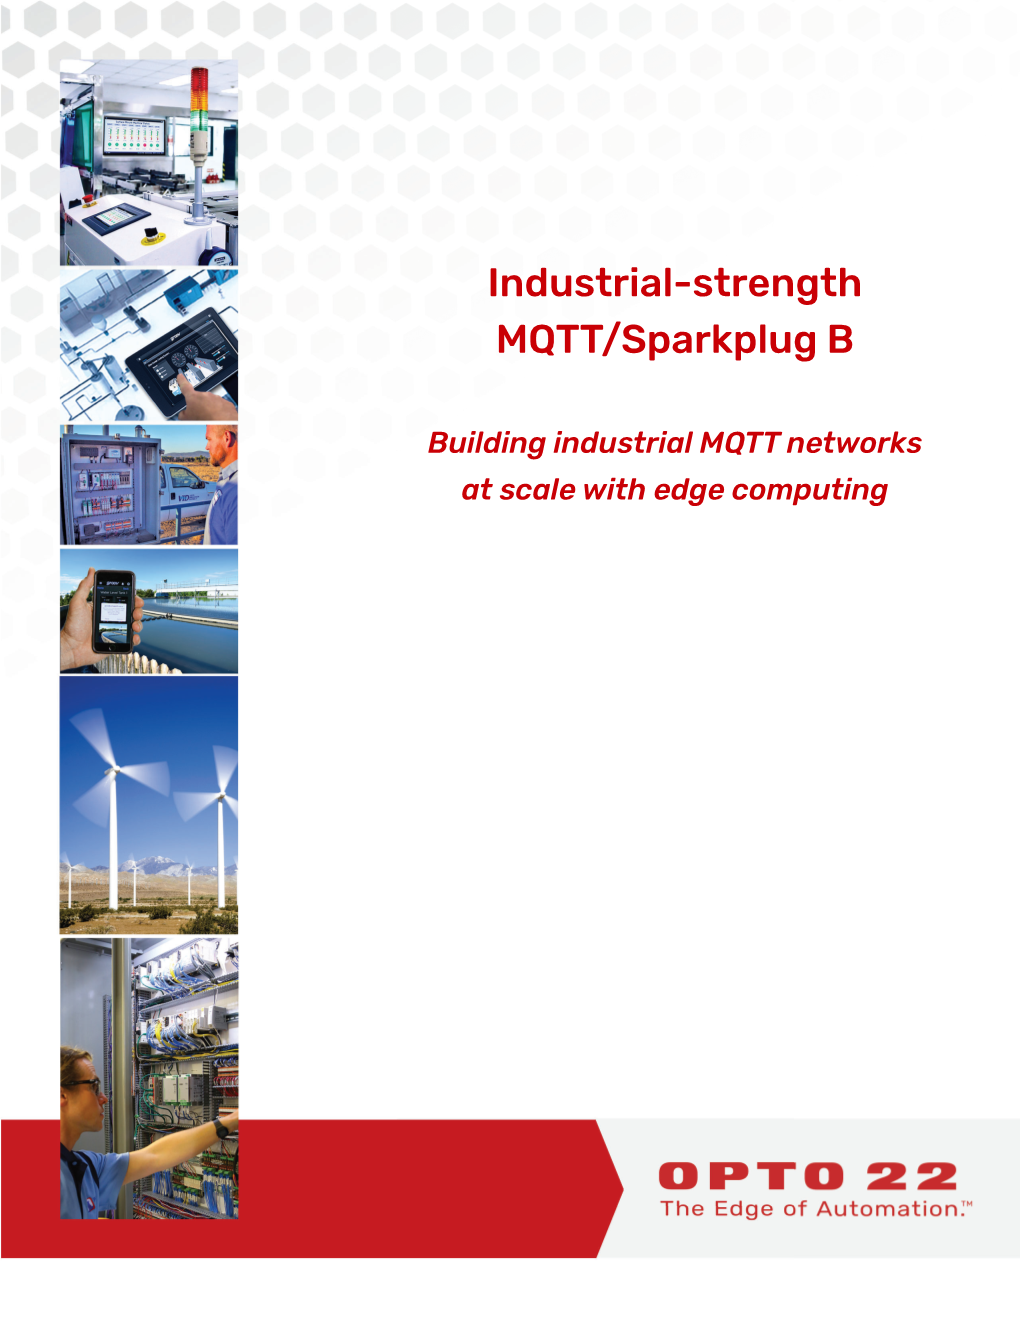 Industrial-Strength MQTT/Sparkplug B